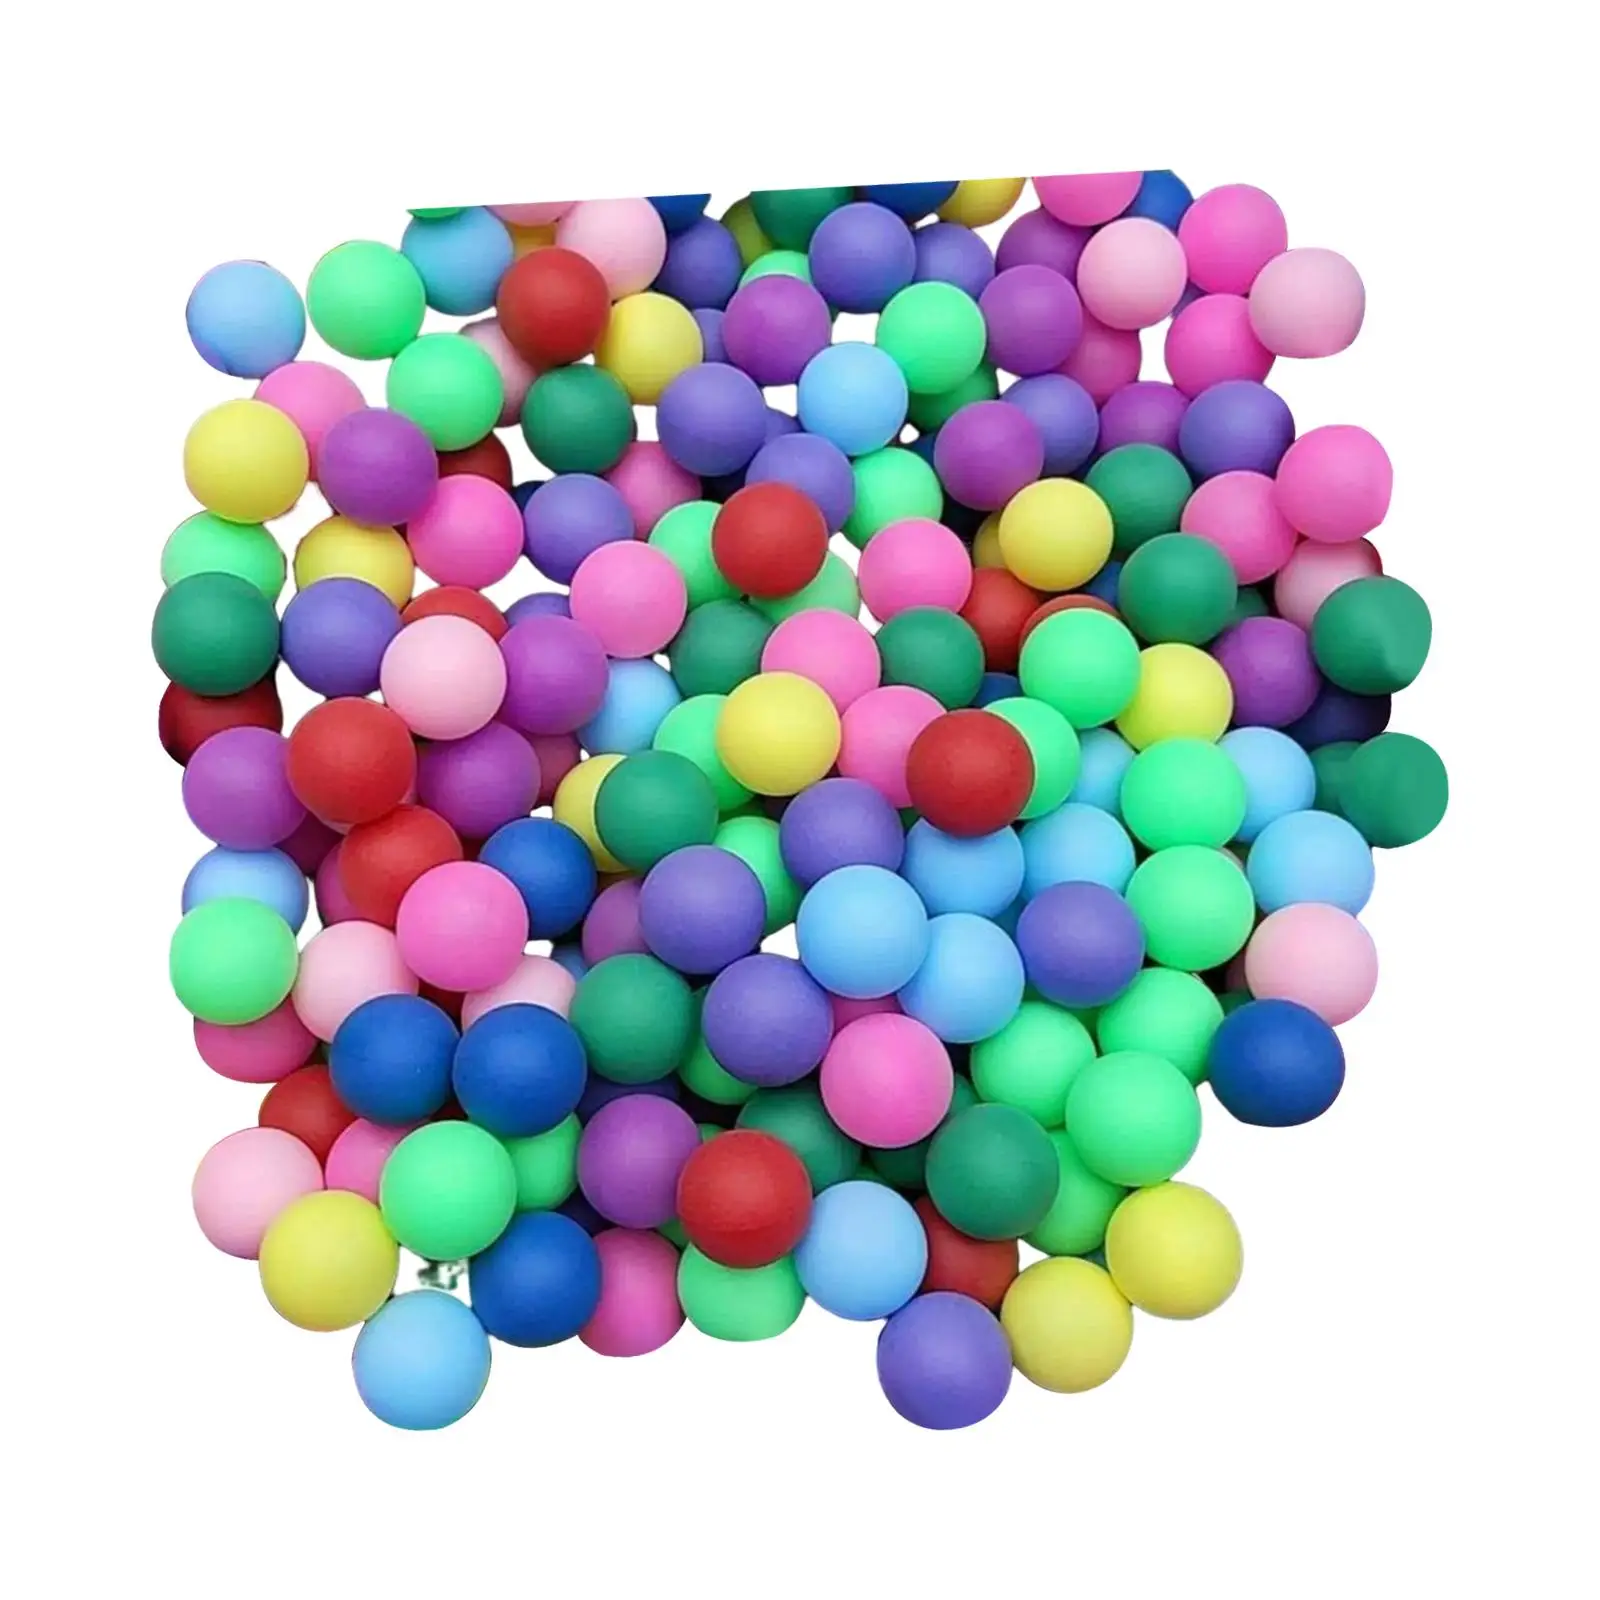 150x 40mm Table Tennis Balls Ping Pong Balls Swing Balls Game Colorful Bouncy